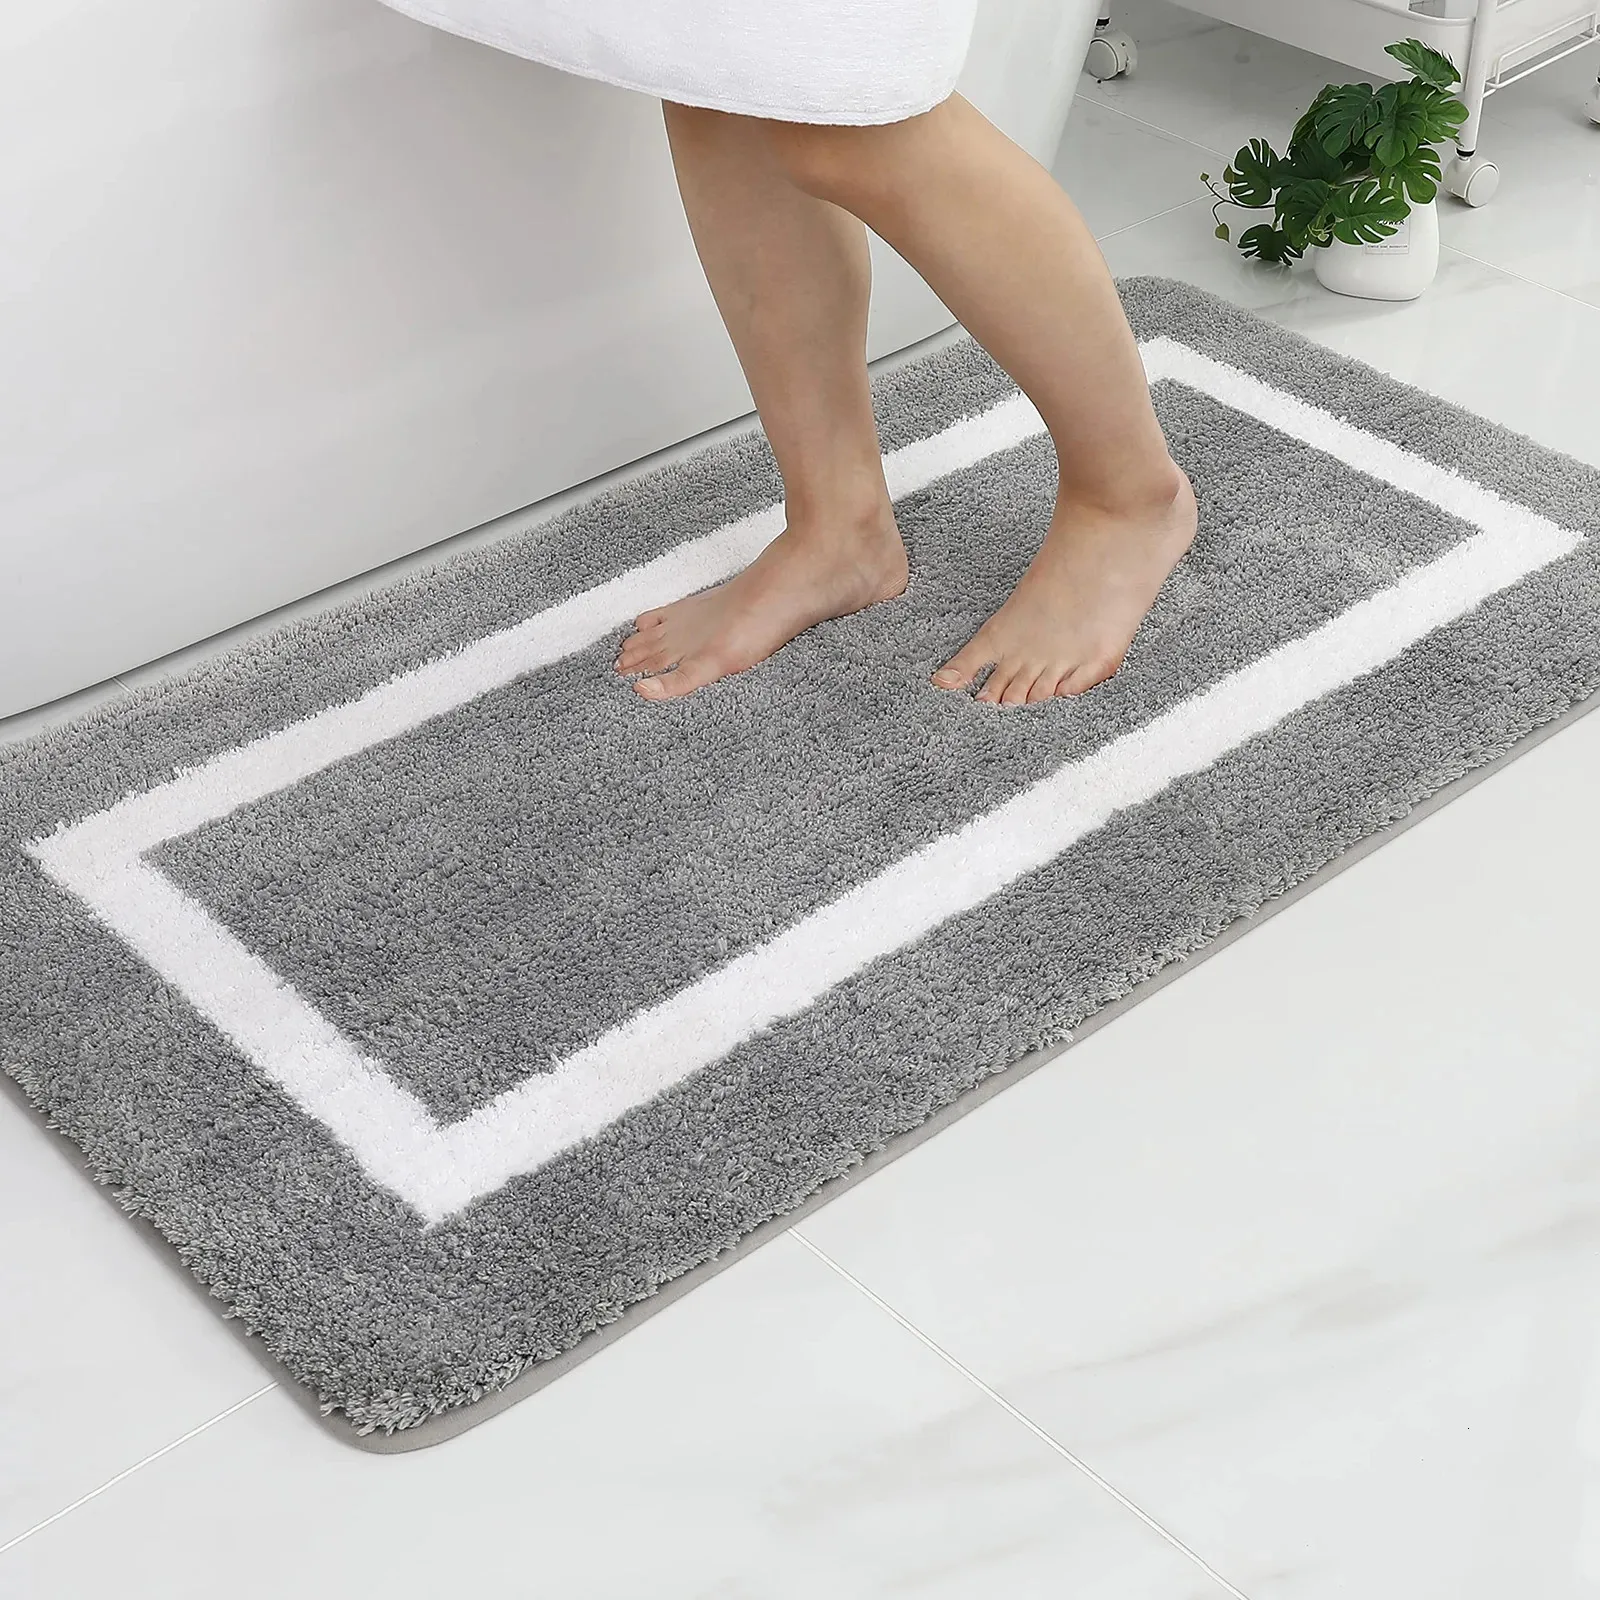 Olanly Absorbent Bath Mat Bathroom Rug Shower Pad Non-Slip Bedroom Foot Carpet Soft Thick Living Room Plush Doormat Floor Decor 231221